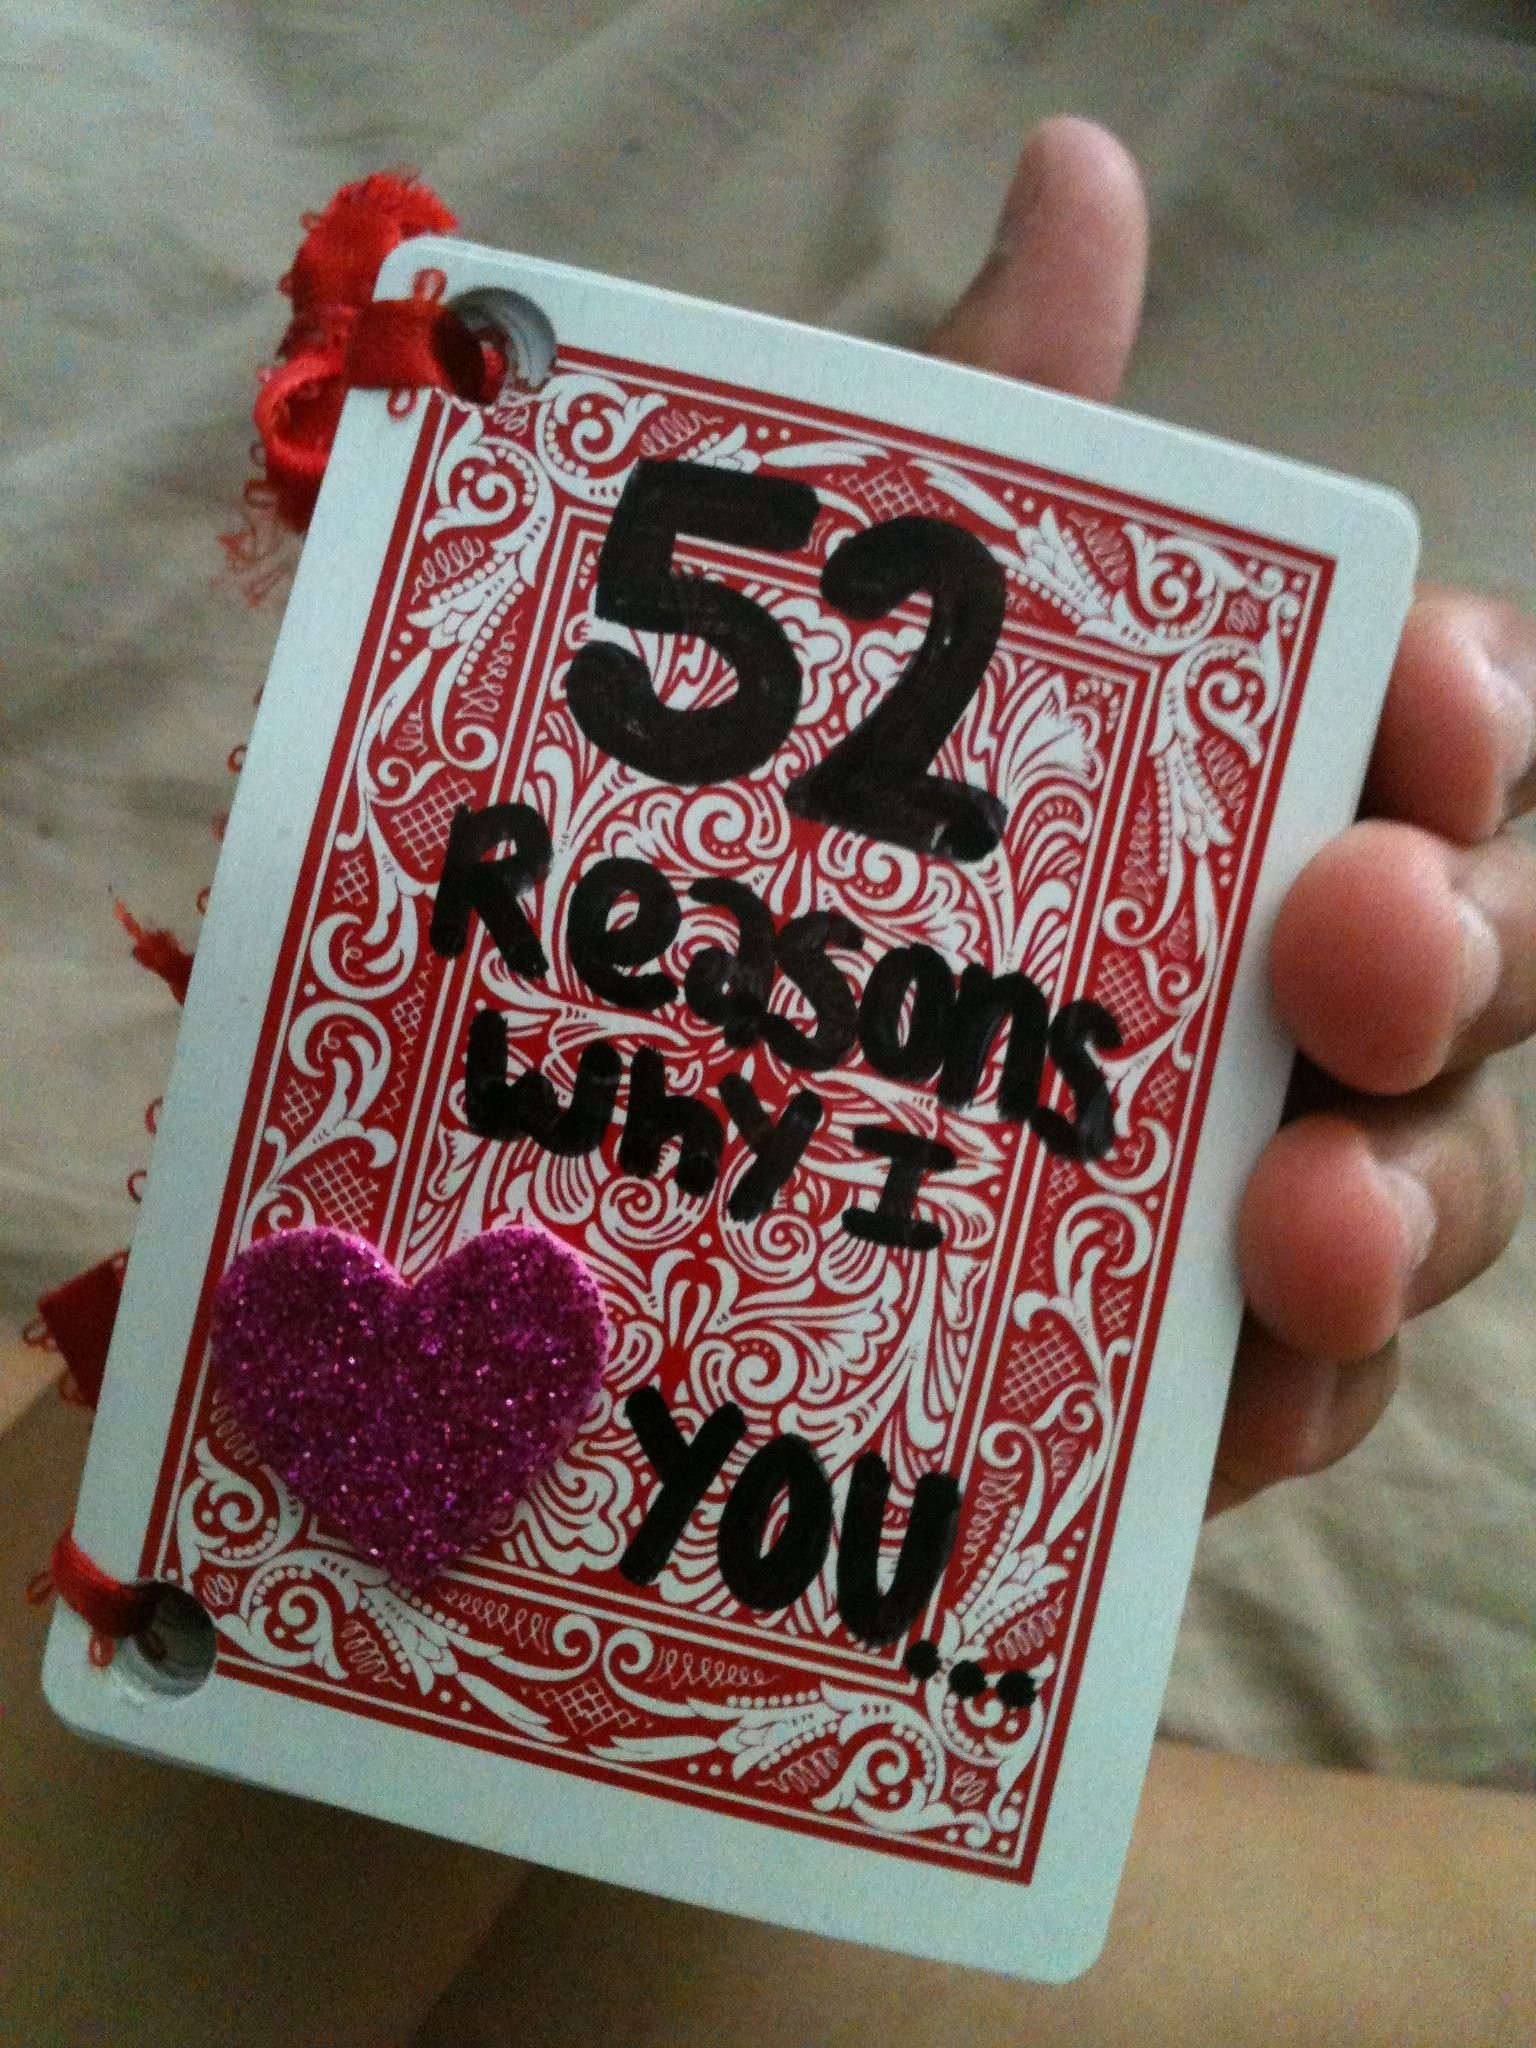 Good Gifts For Your Boyfriend On Valentines Day
 10 Lovable Romantic Birthday Gift Ideas Boyfriend 2021